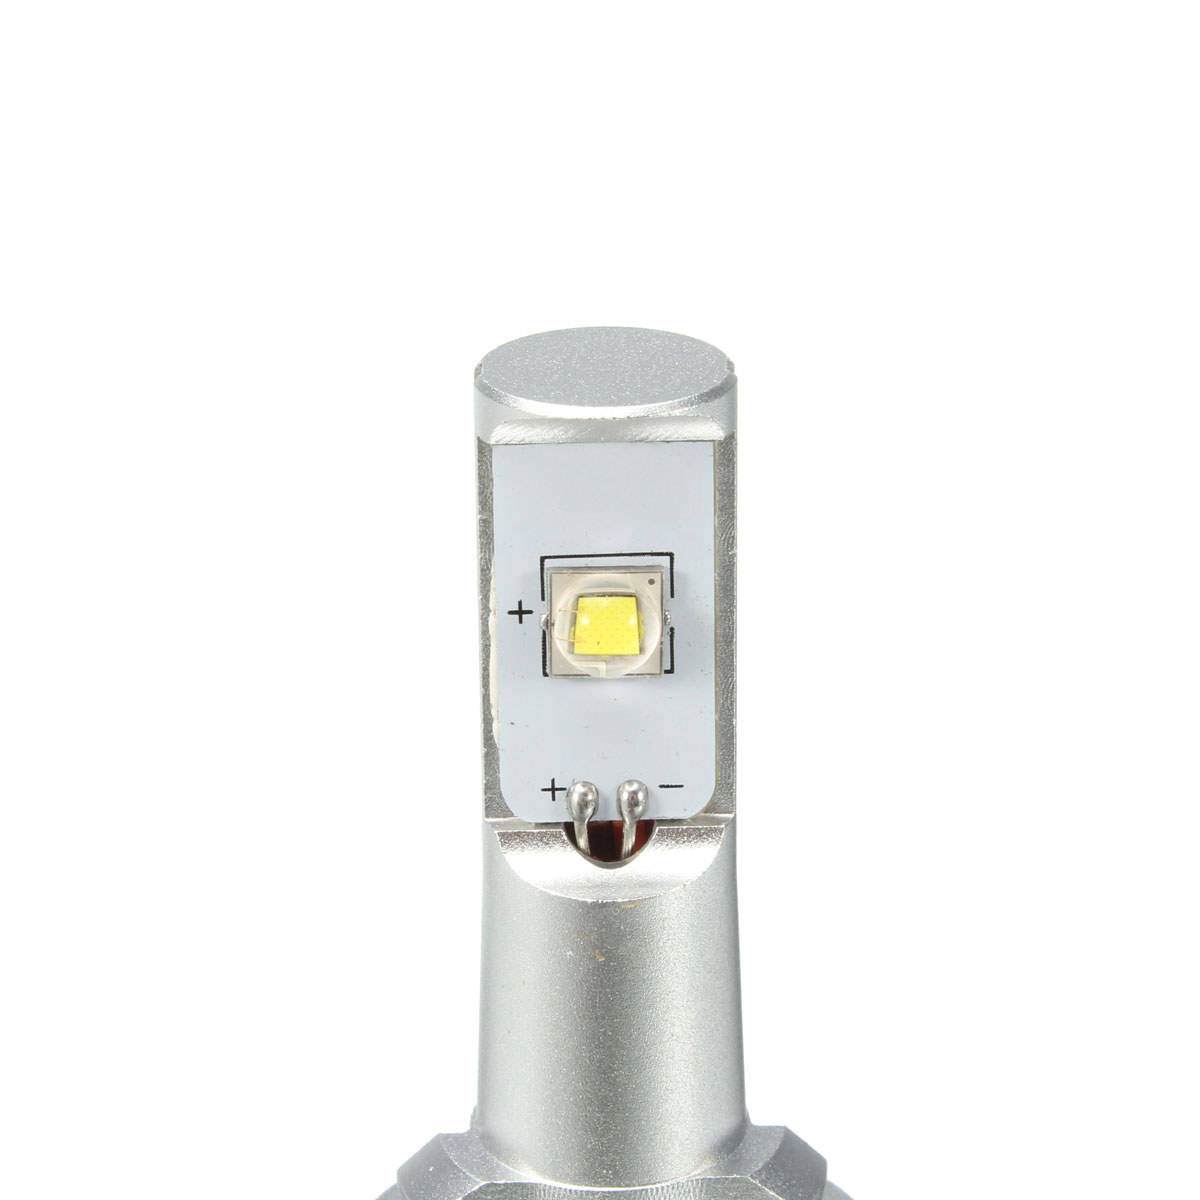 Pair-880-LED-Car-Fog-Lights-Bulb-Lamp-DC12-24V-40W-3000LM-3000K-White-1060317